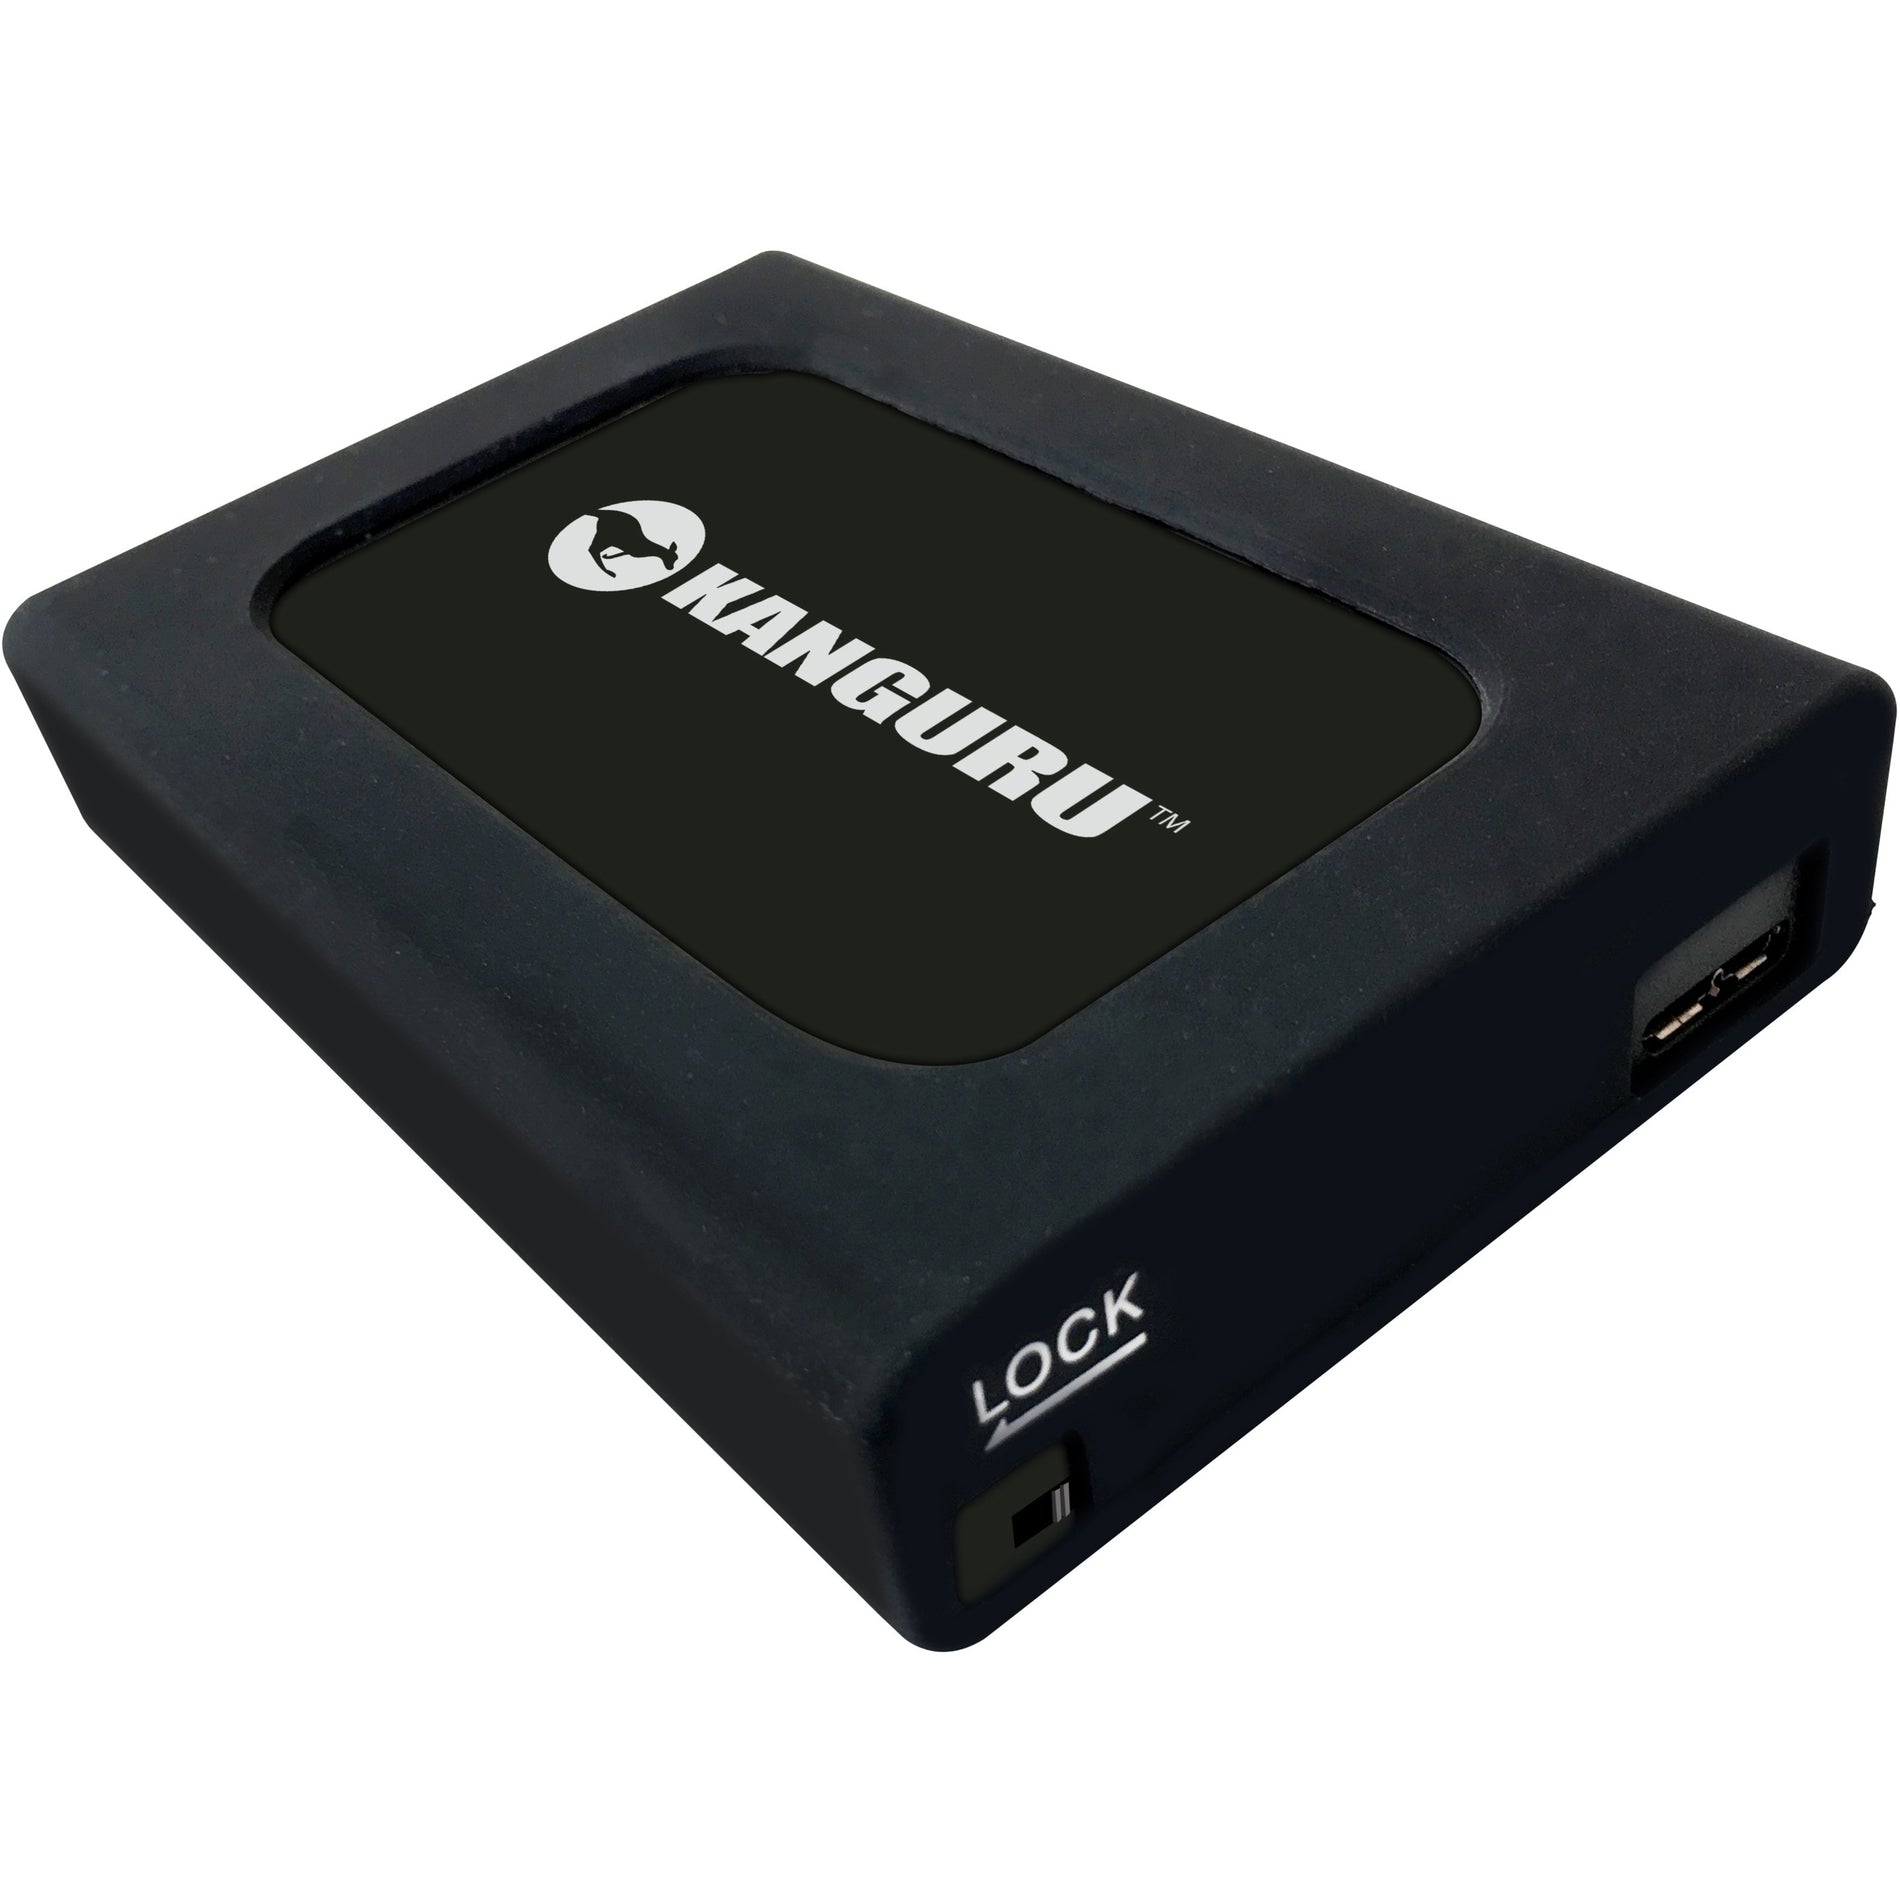 Kanguru U3-2HDWP-240S UltraLock USB 3.0 SSD with Write Protect Switch, 240GB Solid State Drive